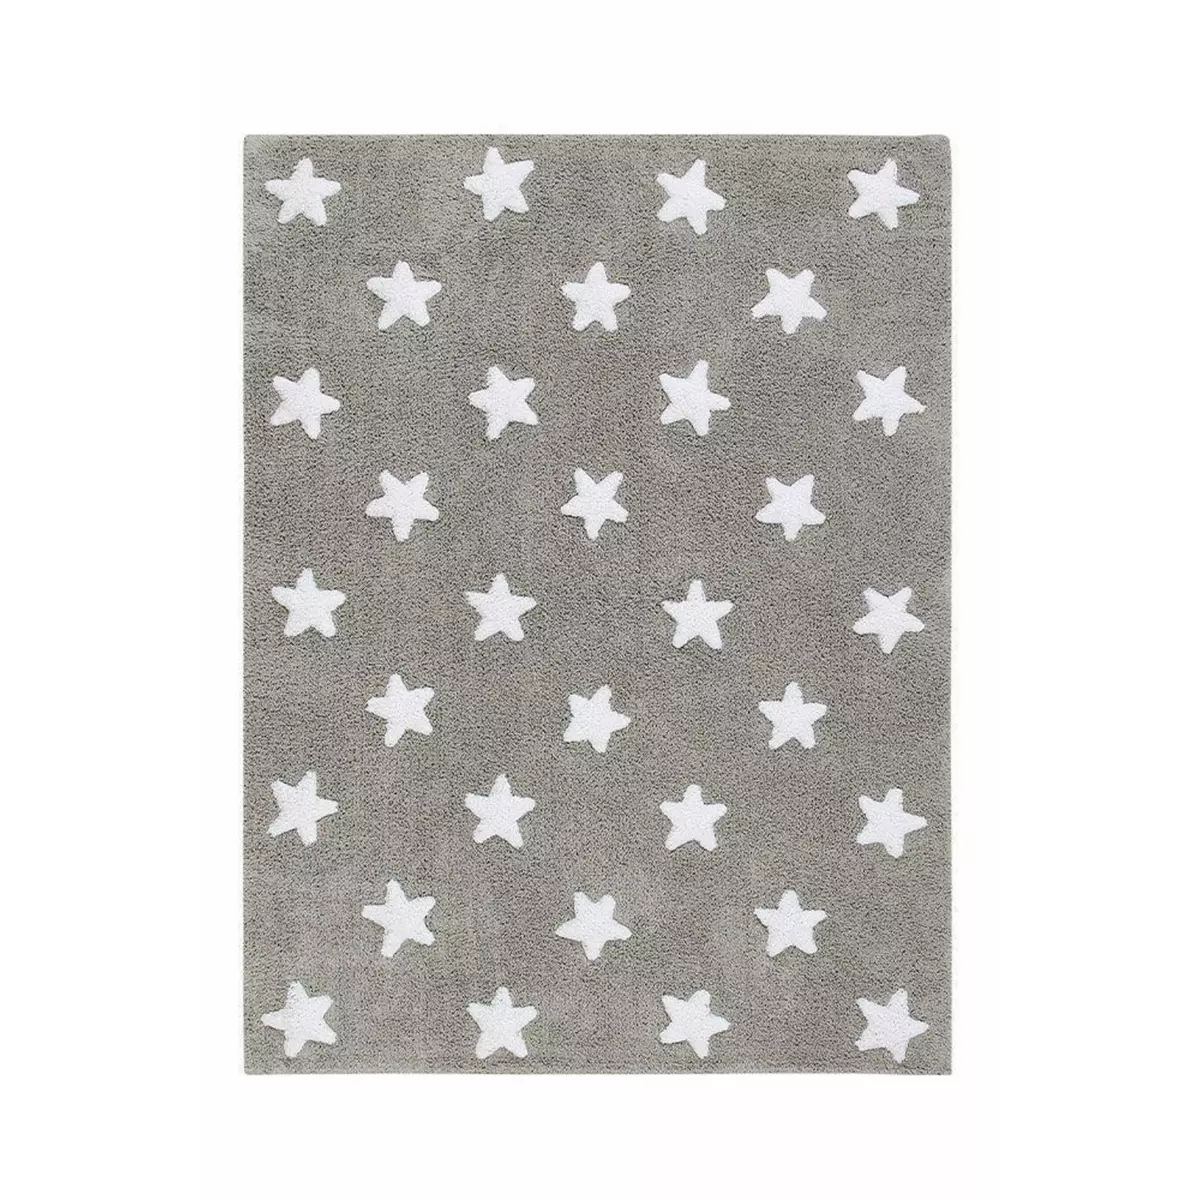 Lorena Canals Tapis coton motif étoile - gris - 120 x 160